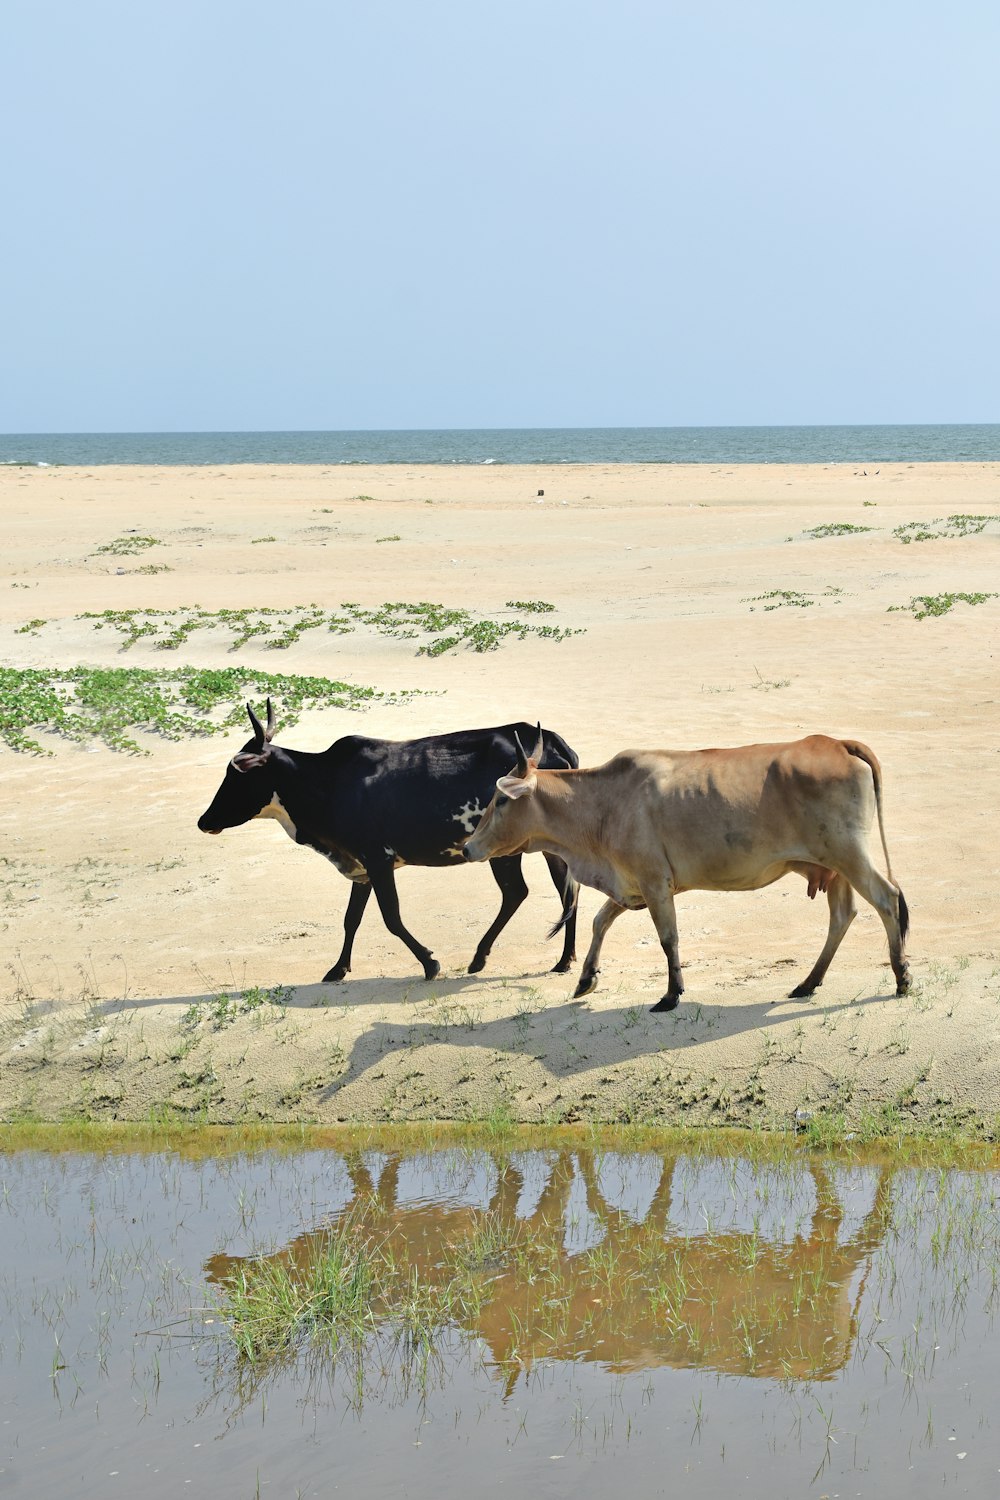 a couple of cows walking across a sandy beach